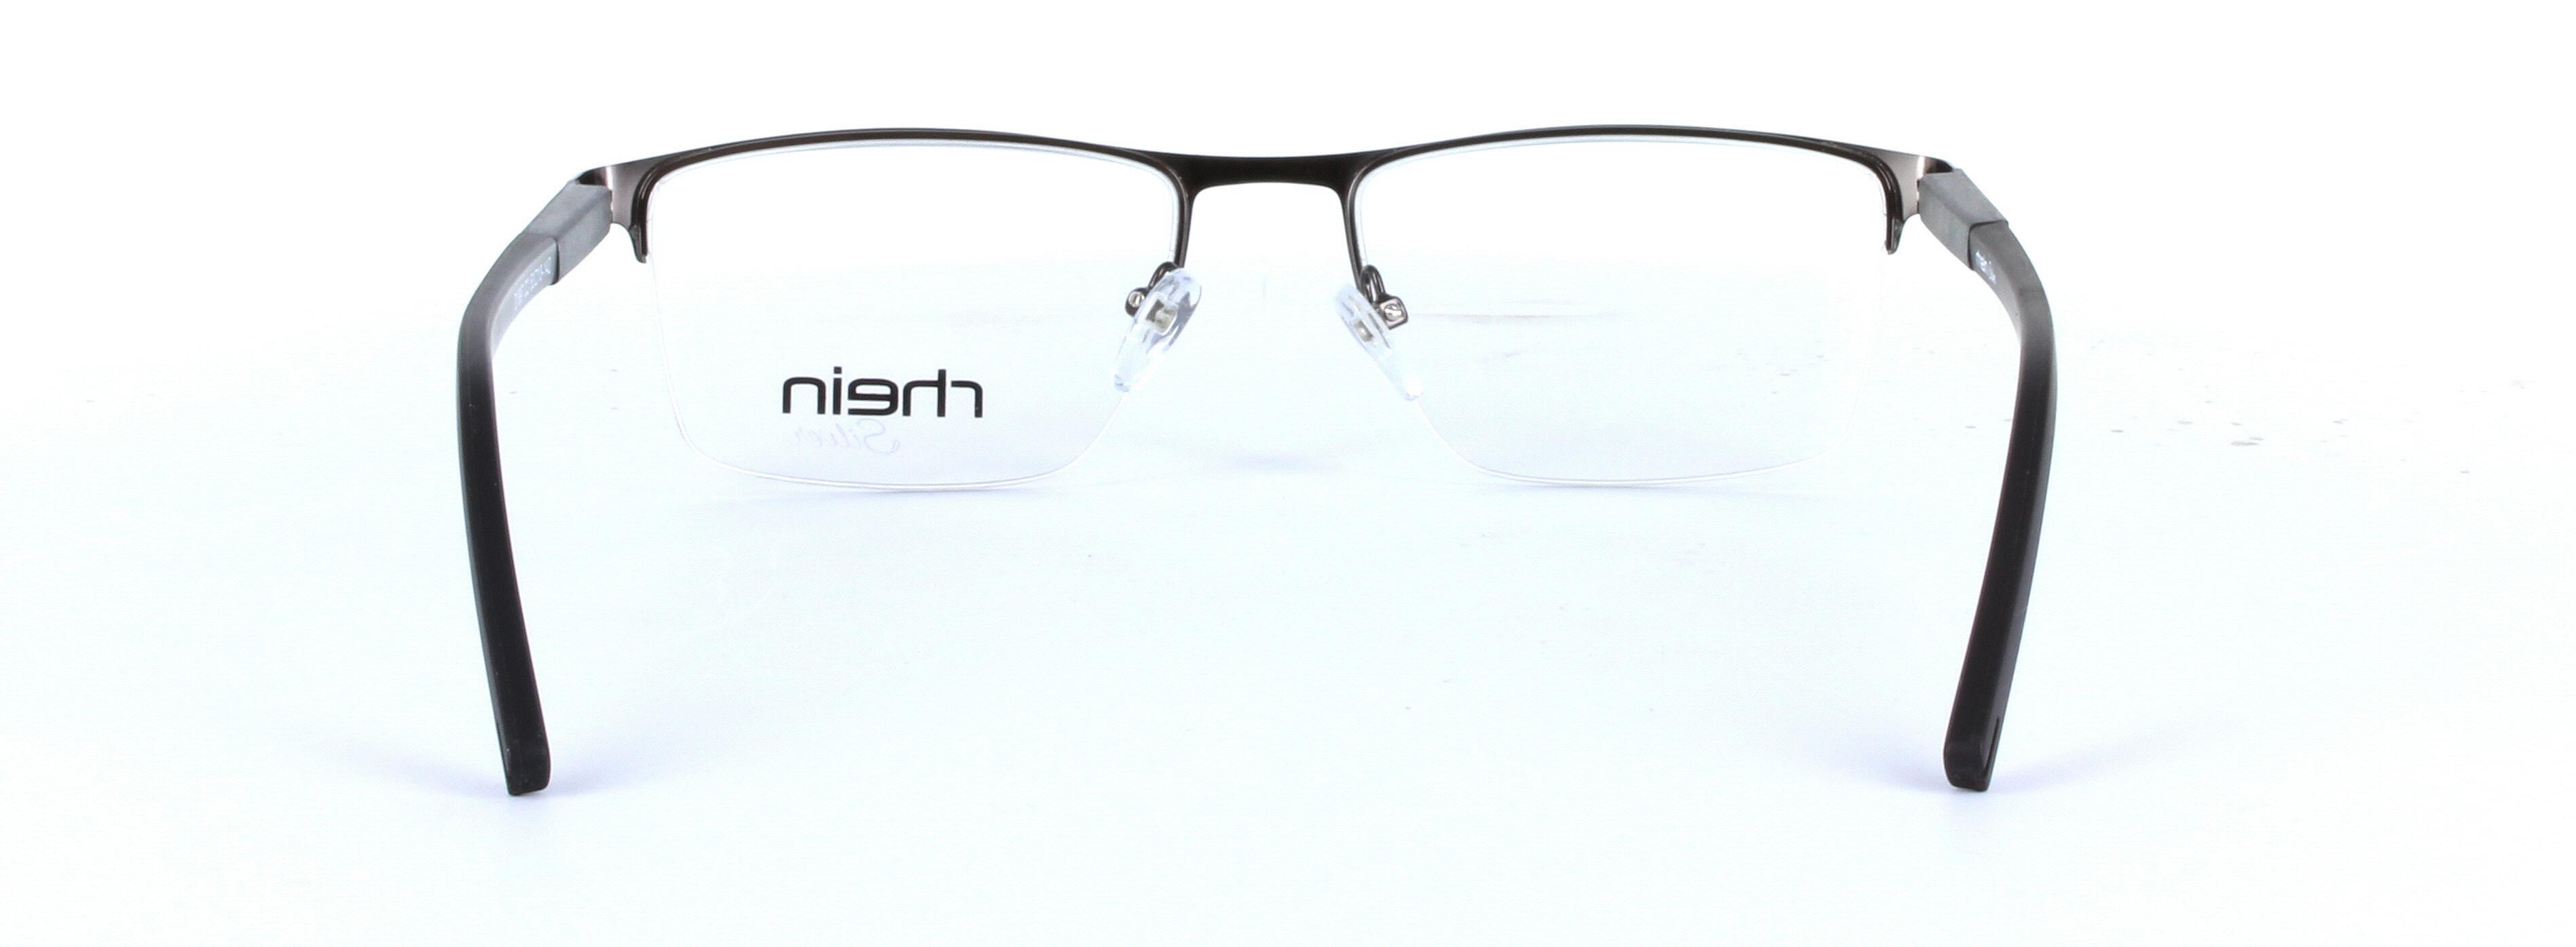 Dell Black Semi Rimless Rectangular Metal Glasses - Image View 3